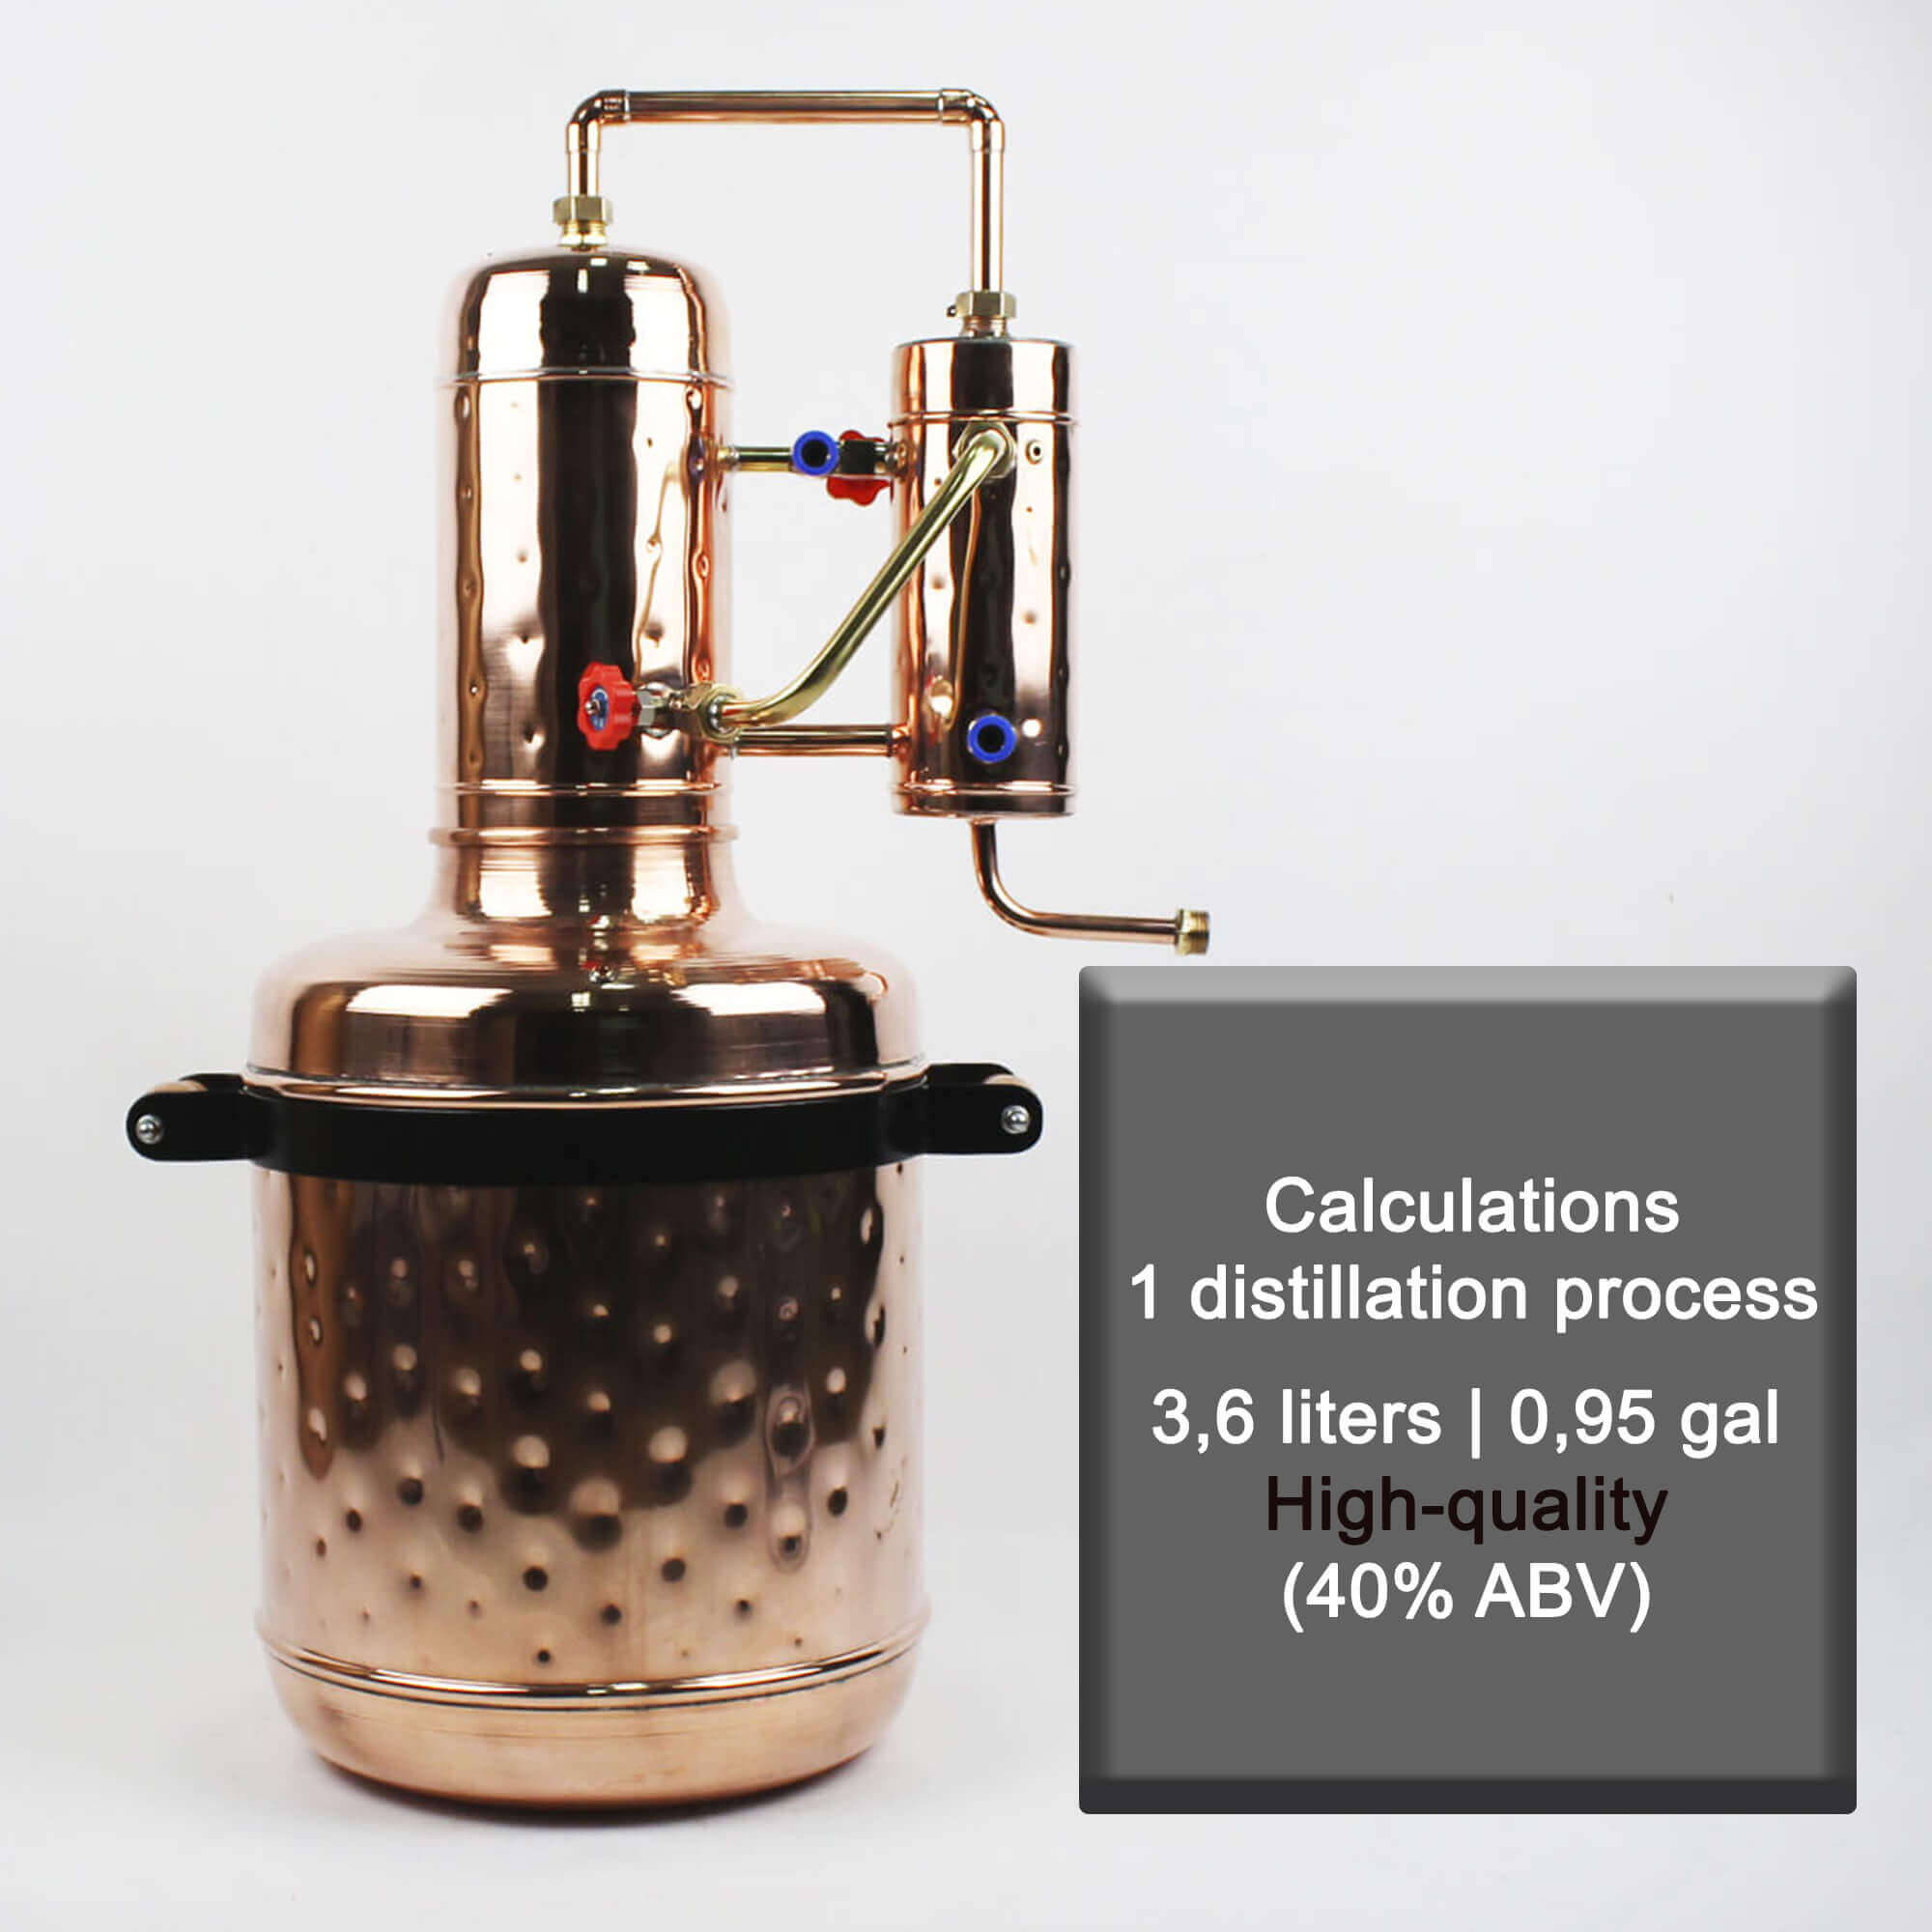 Calculations distillation process